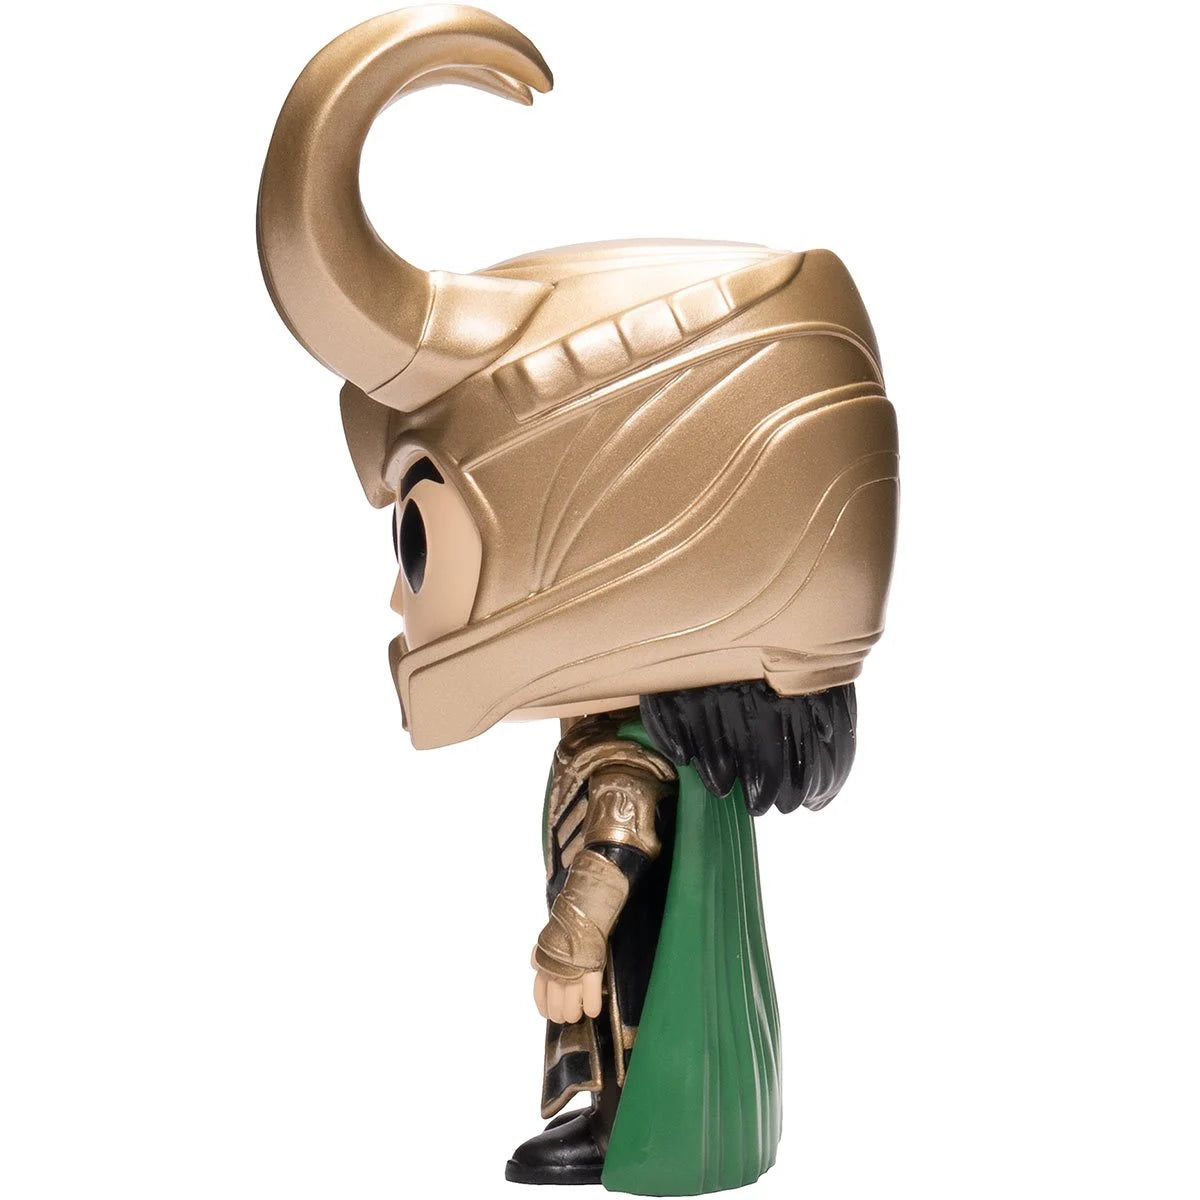 Funko Pop Marvel: Avengers - Loki con Cetro Glow Exclusivo